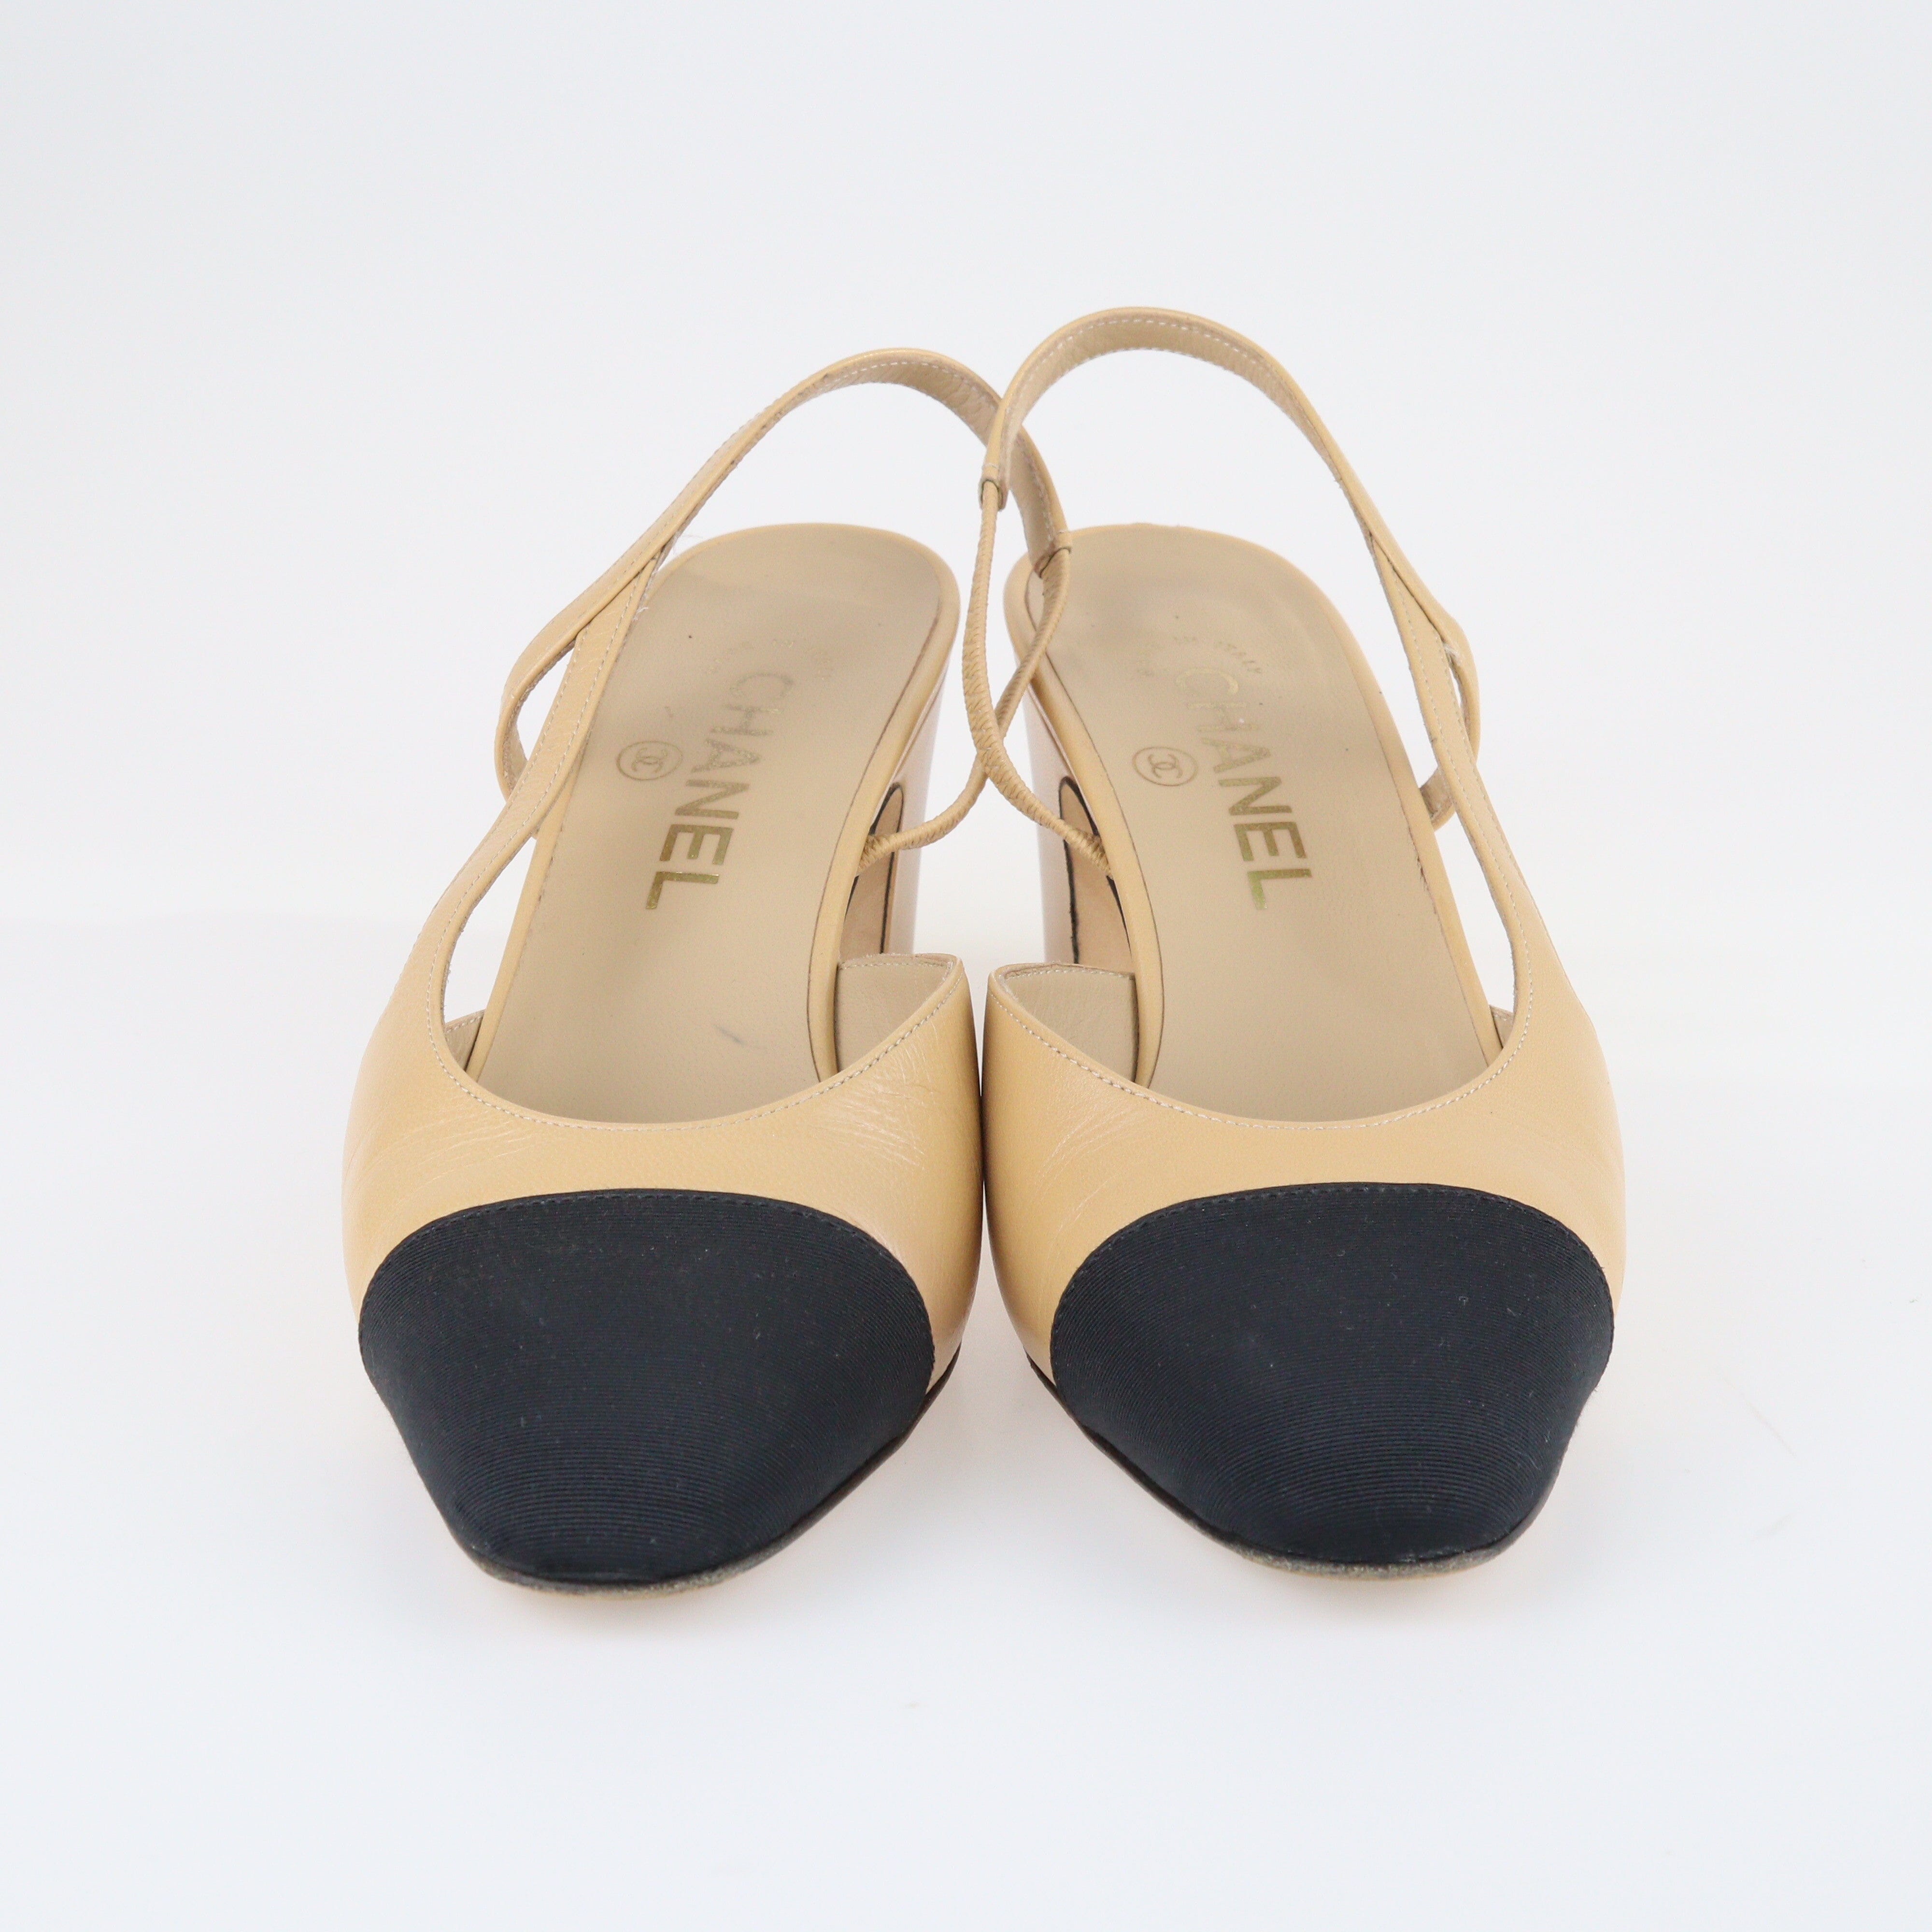 Beige/Black Cap Toe CC D'orsay Slingback Pumps Shoes Chanel 